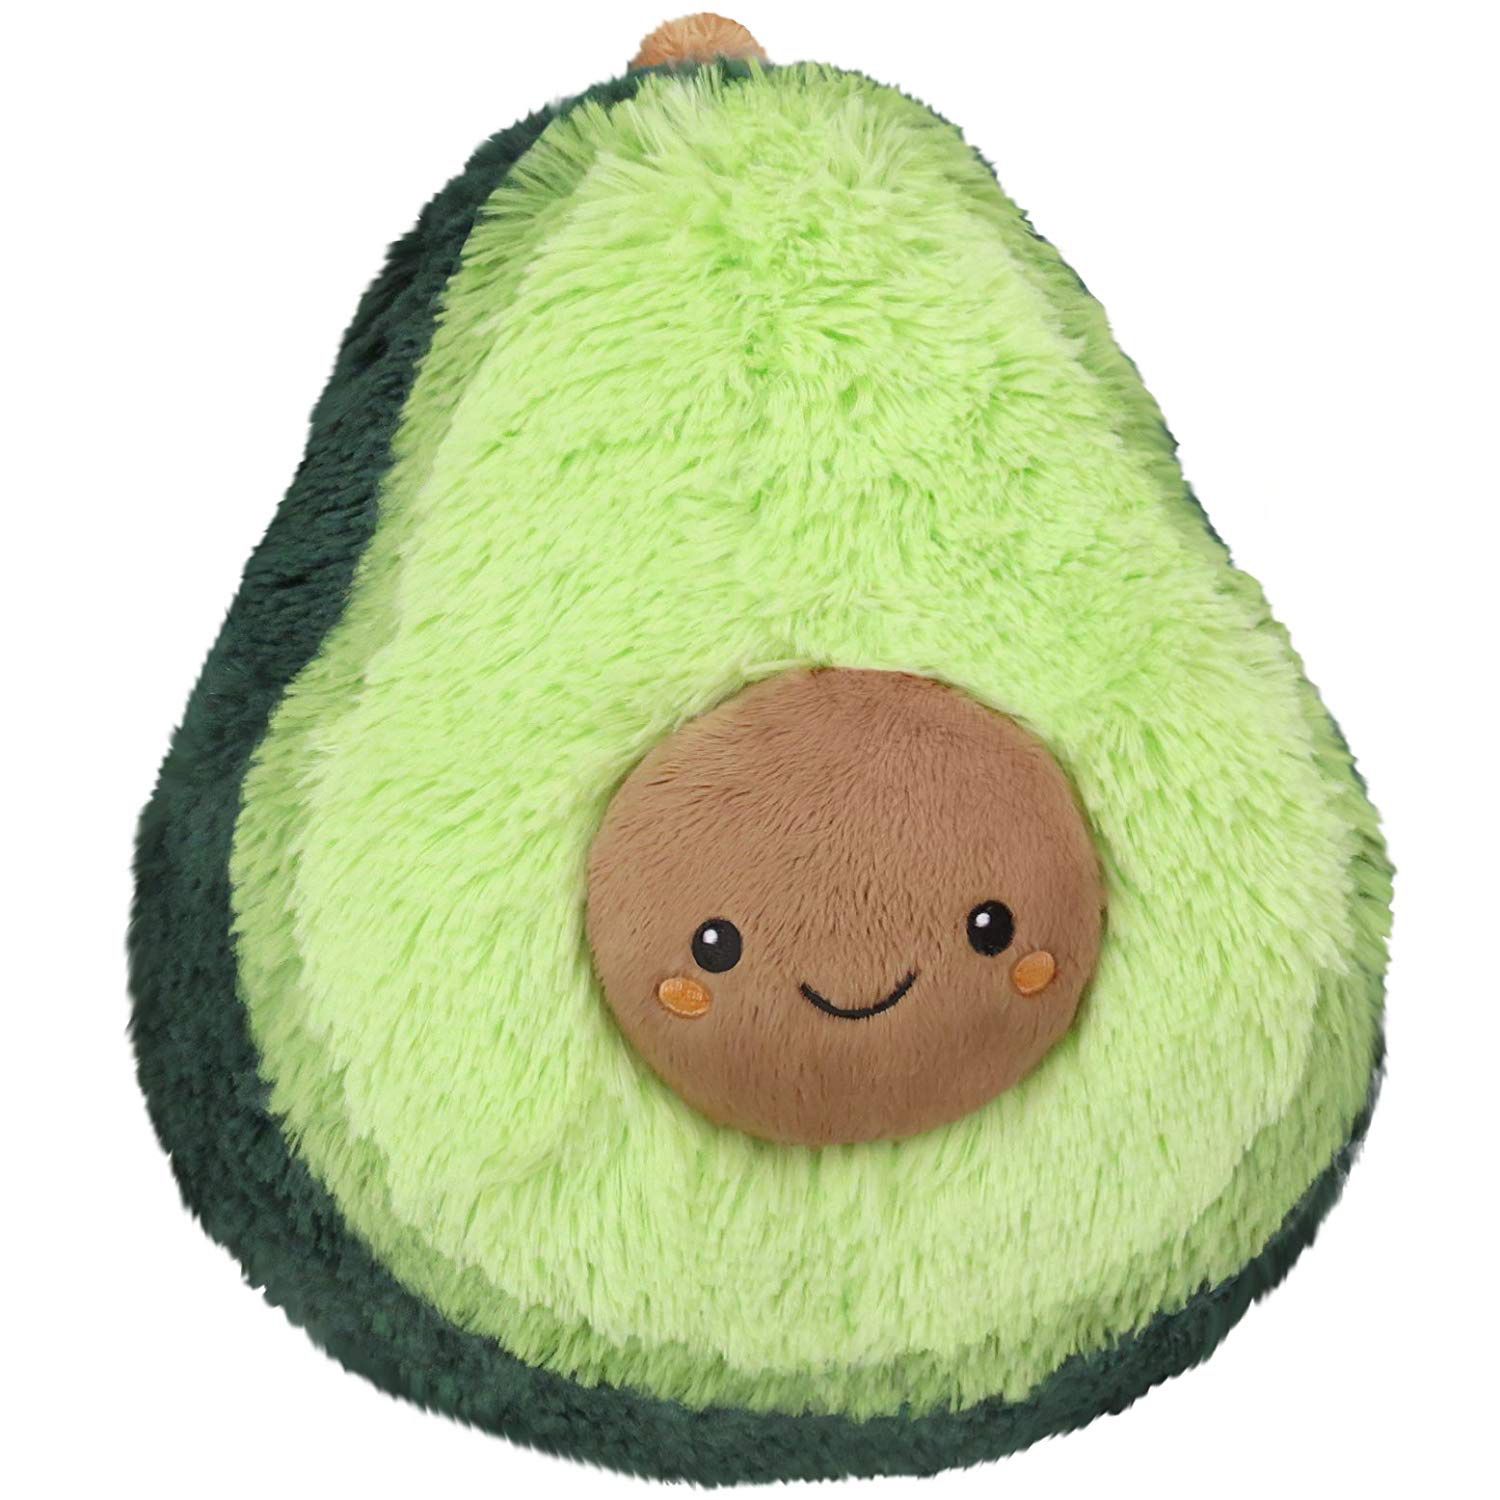 Avocado stuffed animal plush toy 15 inch